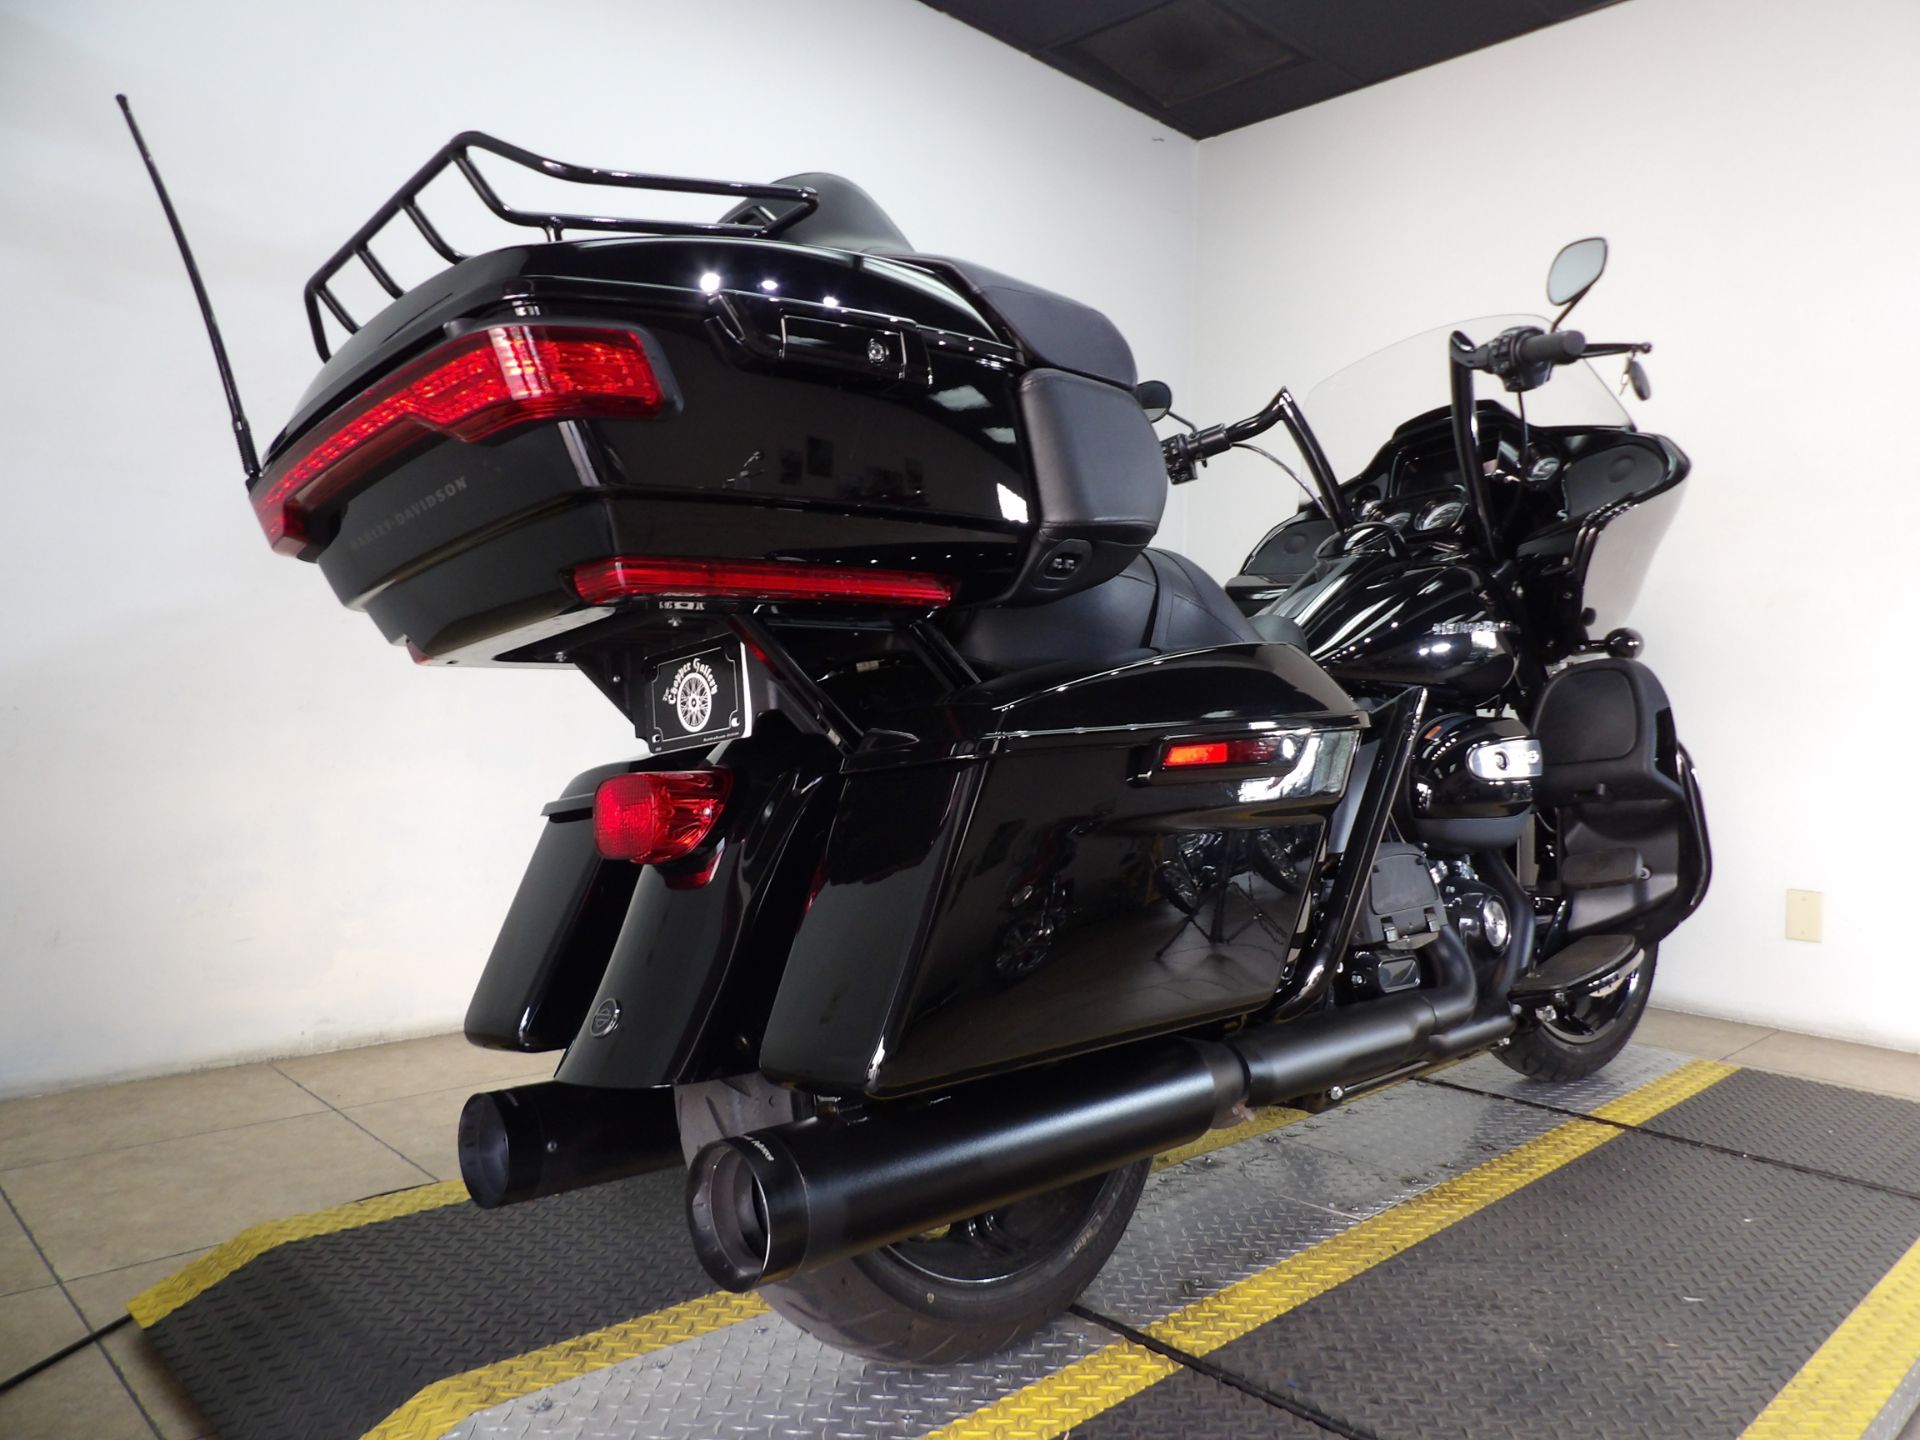 2021 Harley-Davidson Road Glide® Limited in Temecula, California - Photo 35